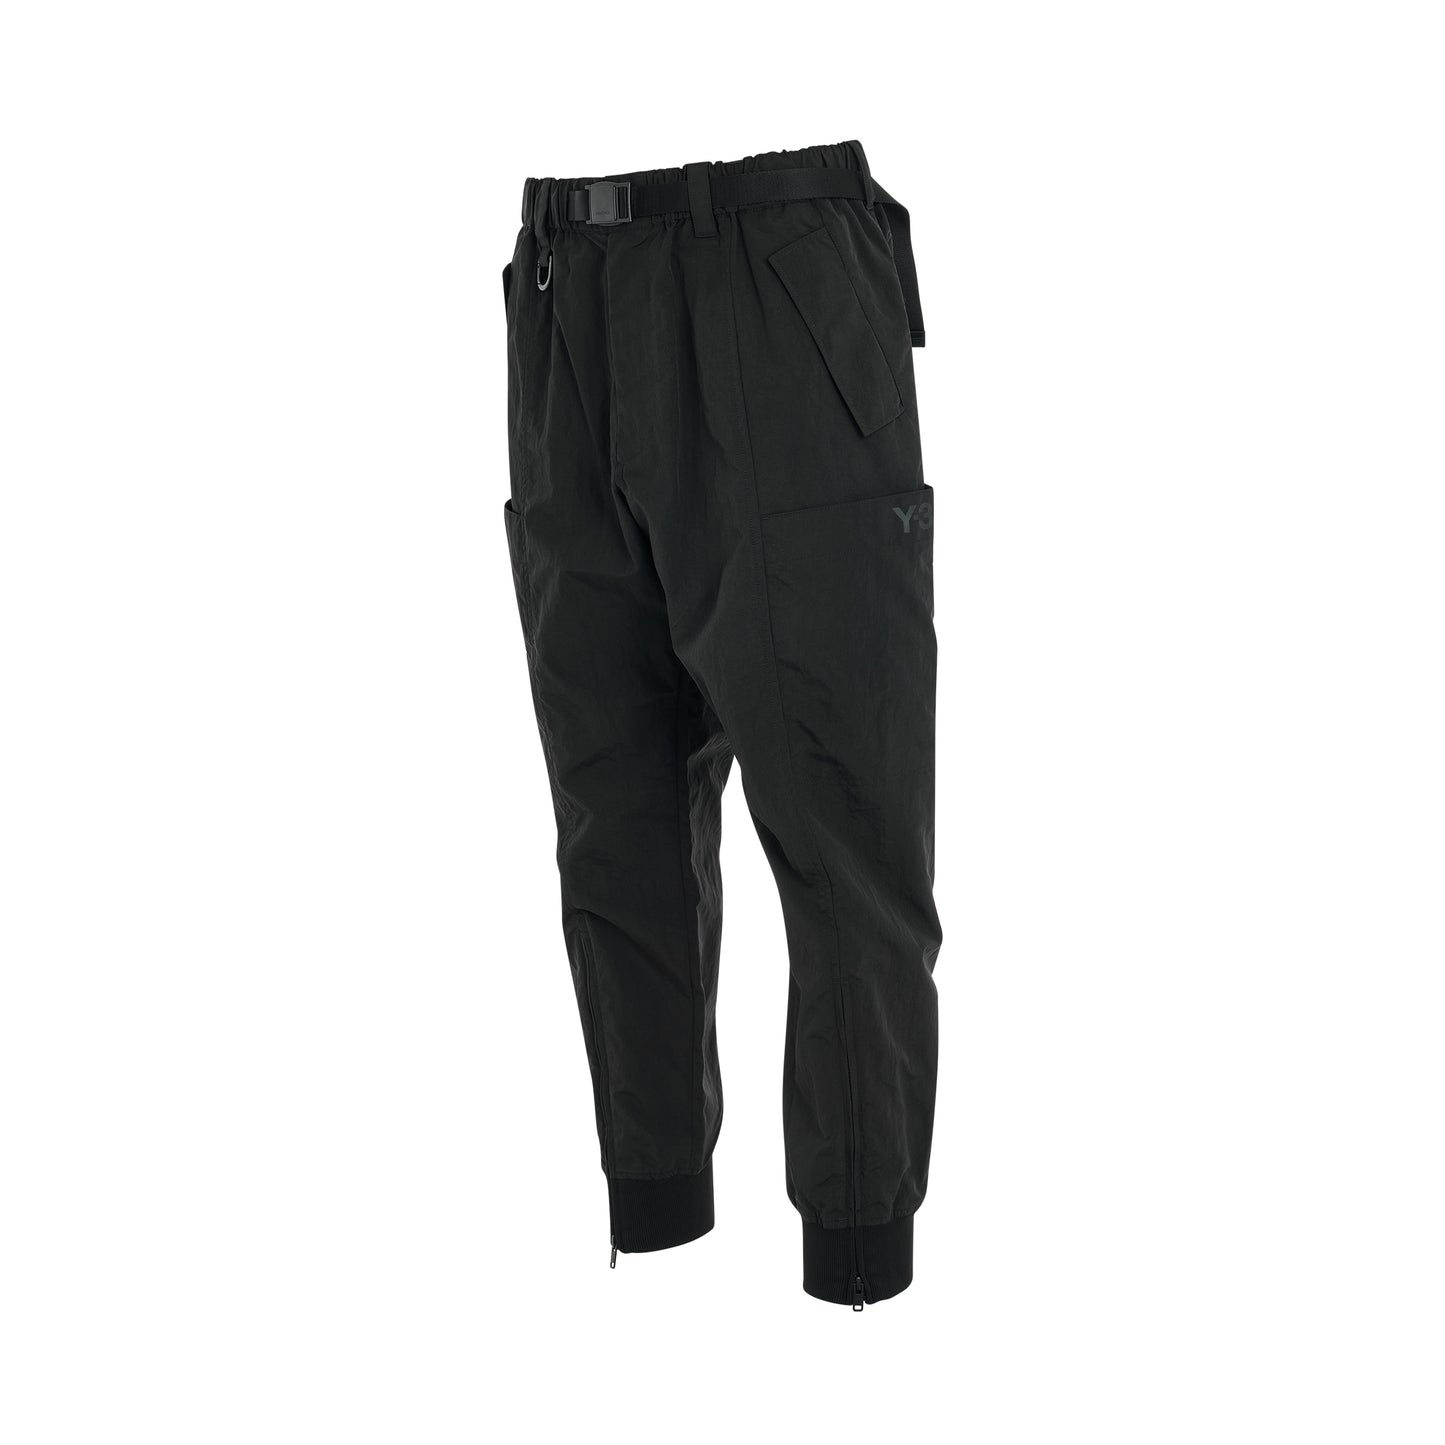 Crinkle Nylong Cuff Pants in Black